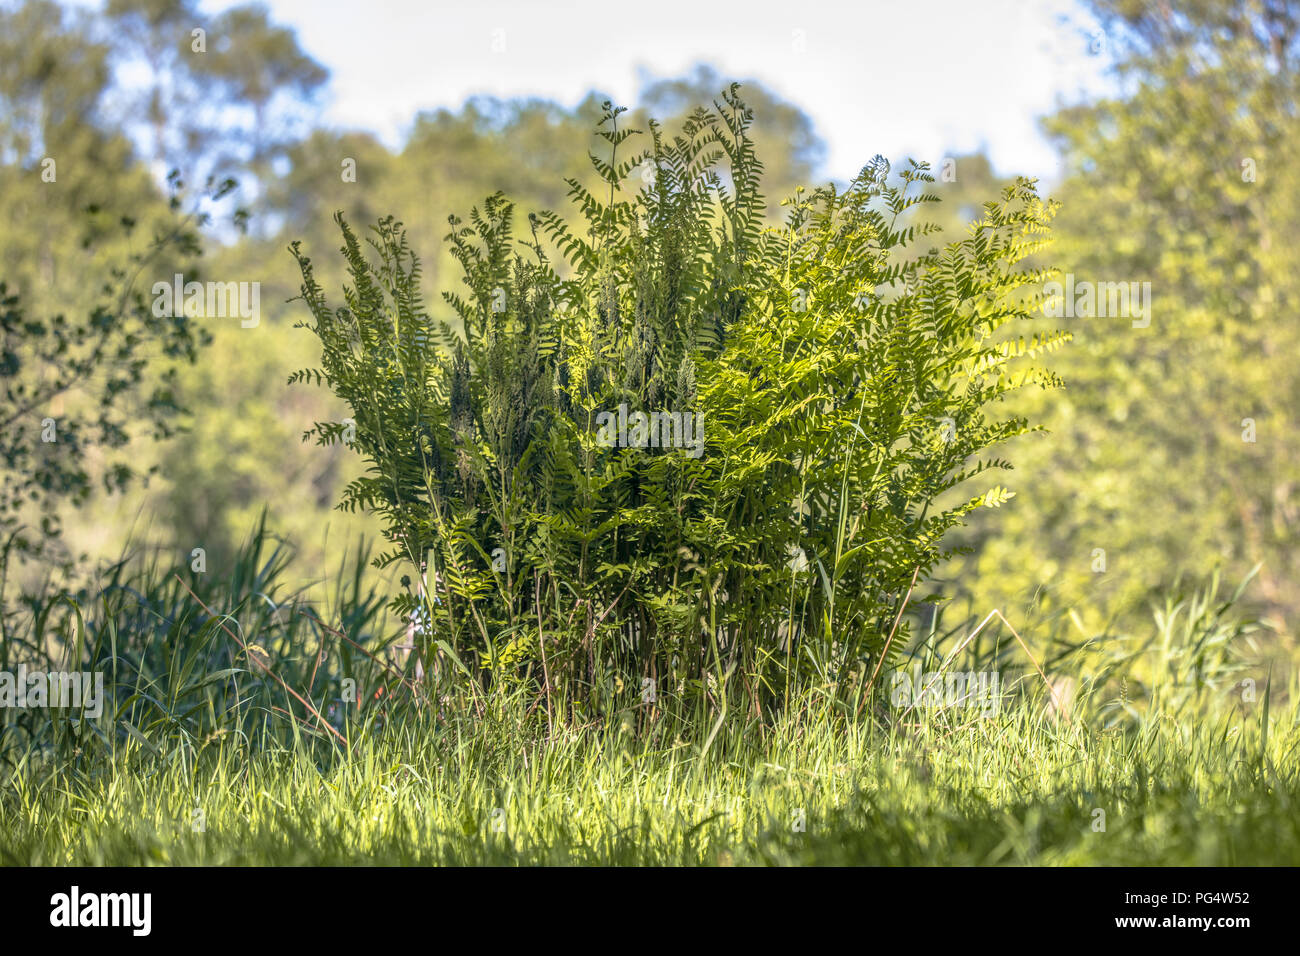 Royal fern (Osmunda regalis) on natural growing site environment Stock Photo